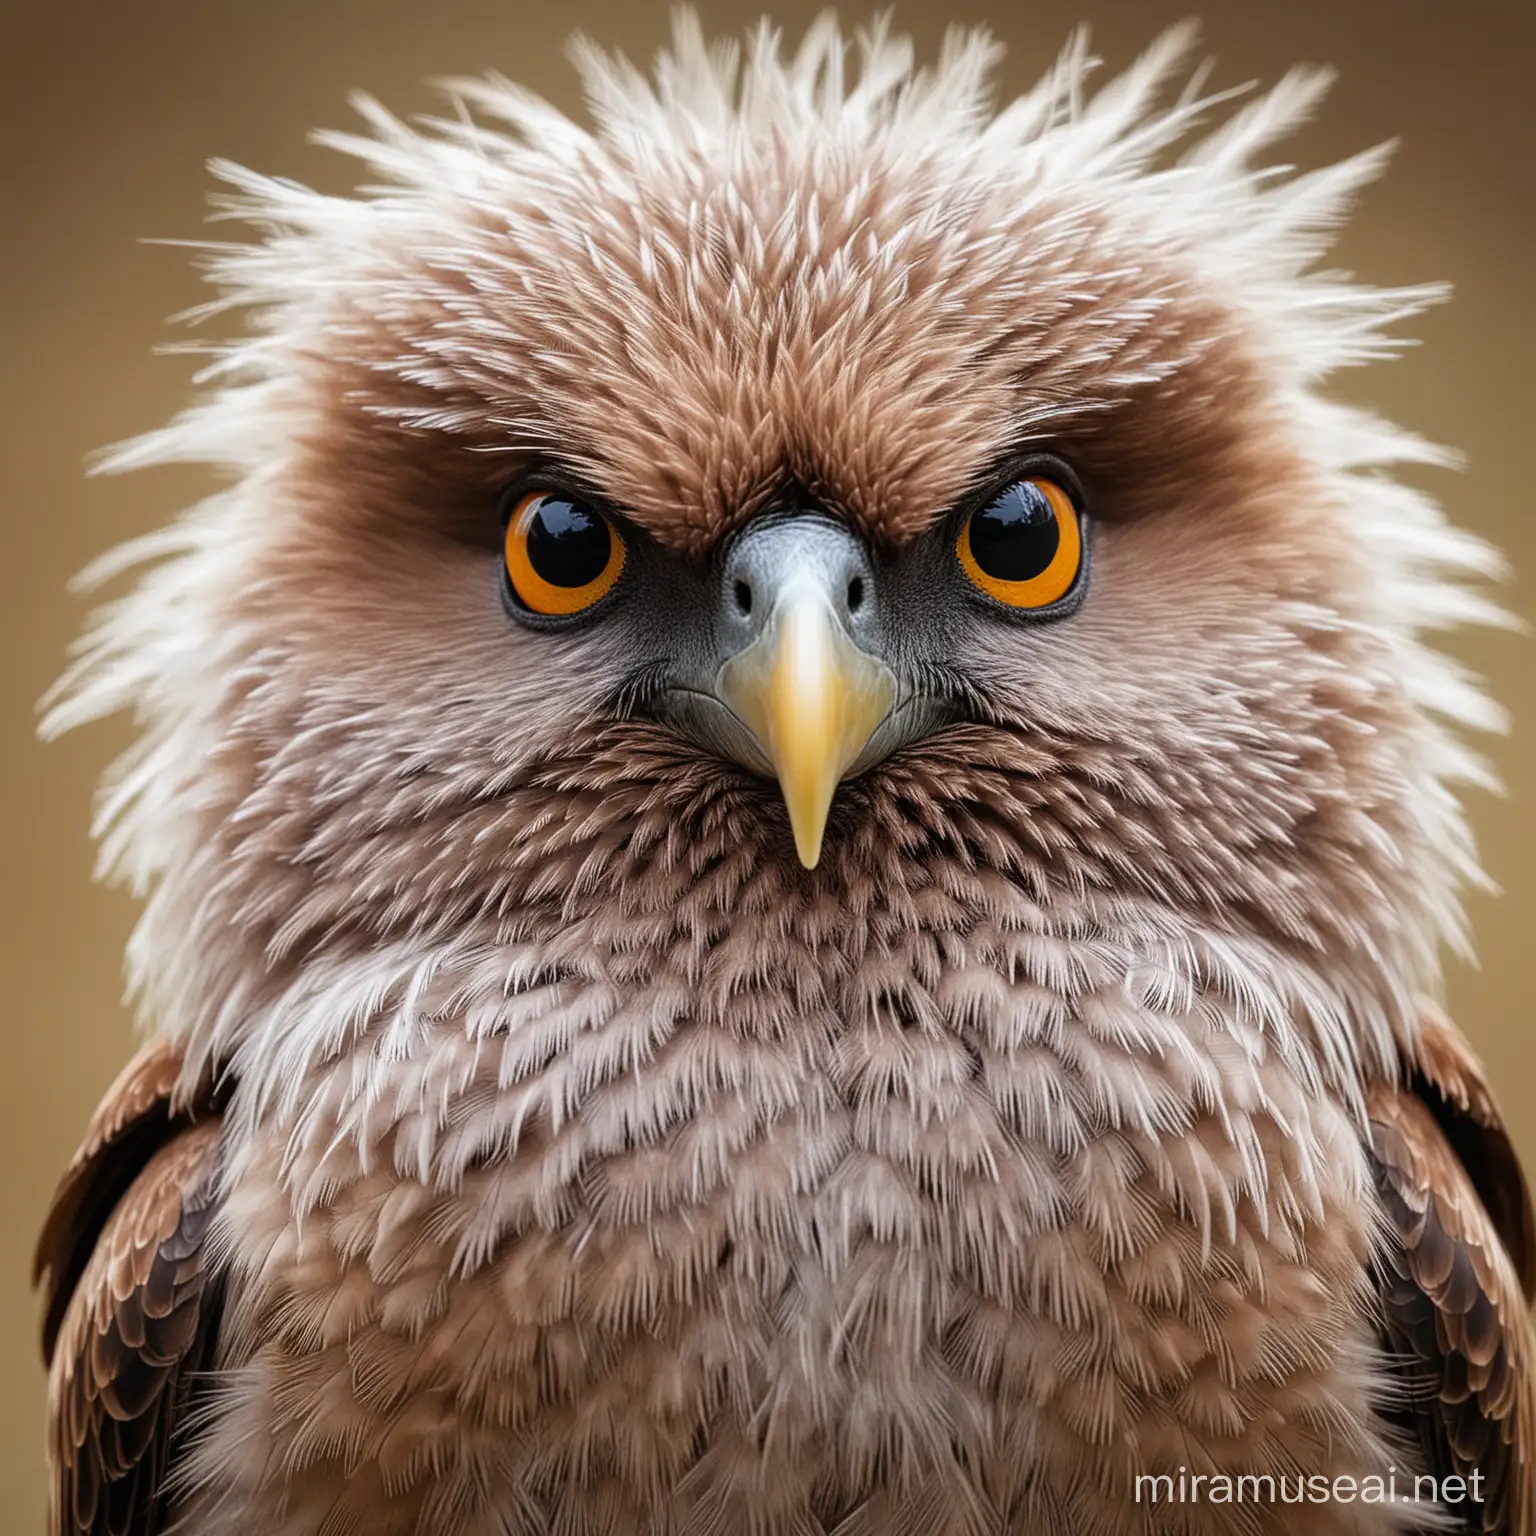 Majestic Bird Portrait in Closeup Photography